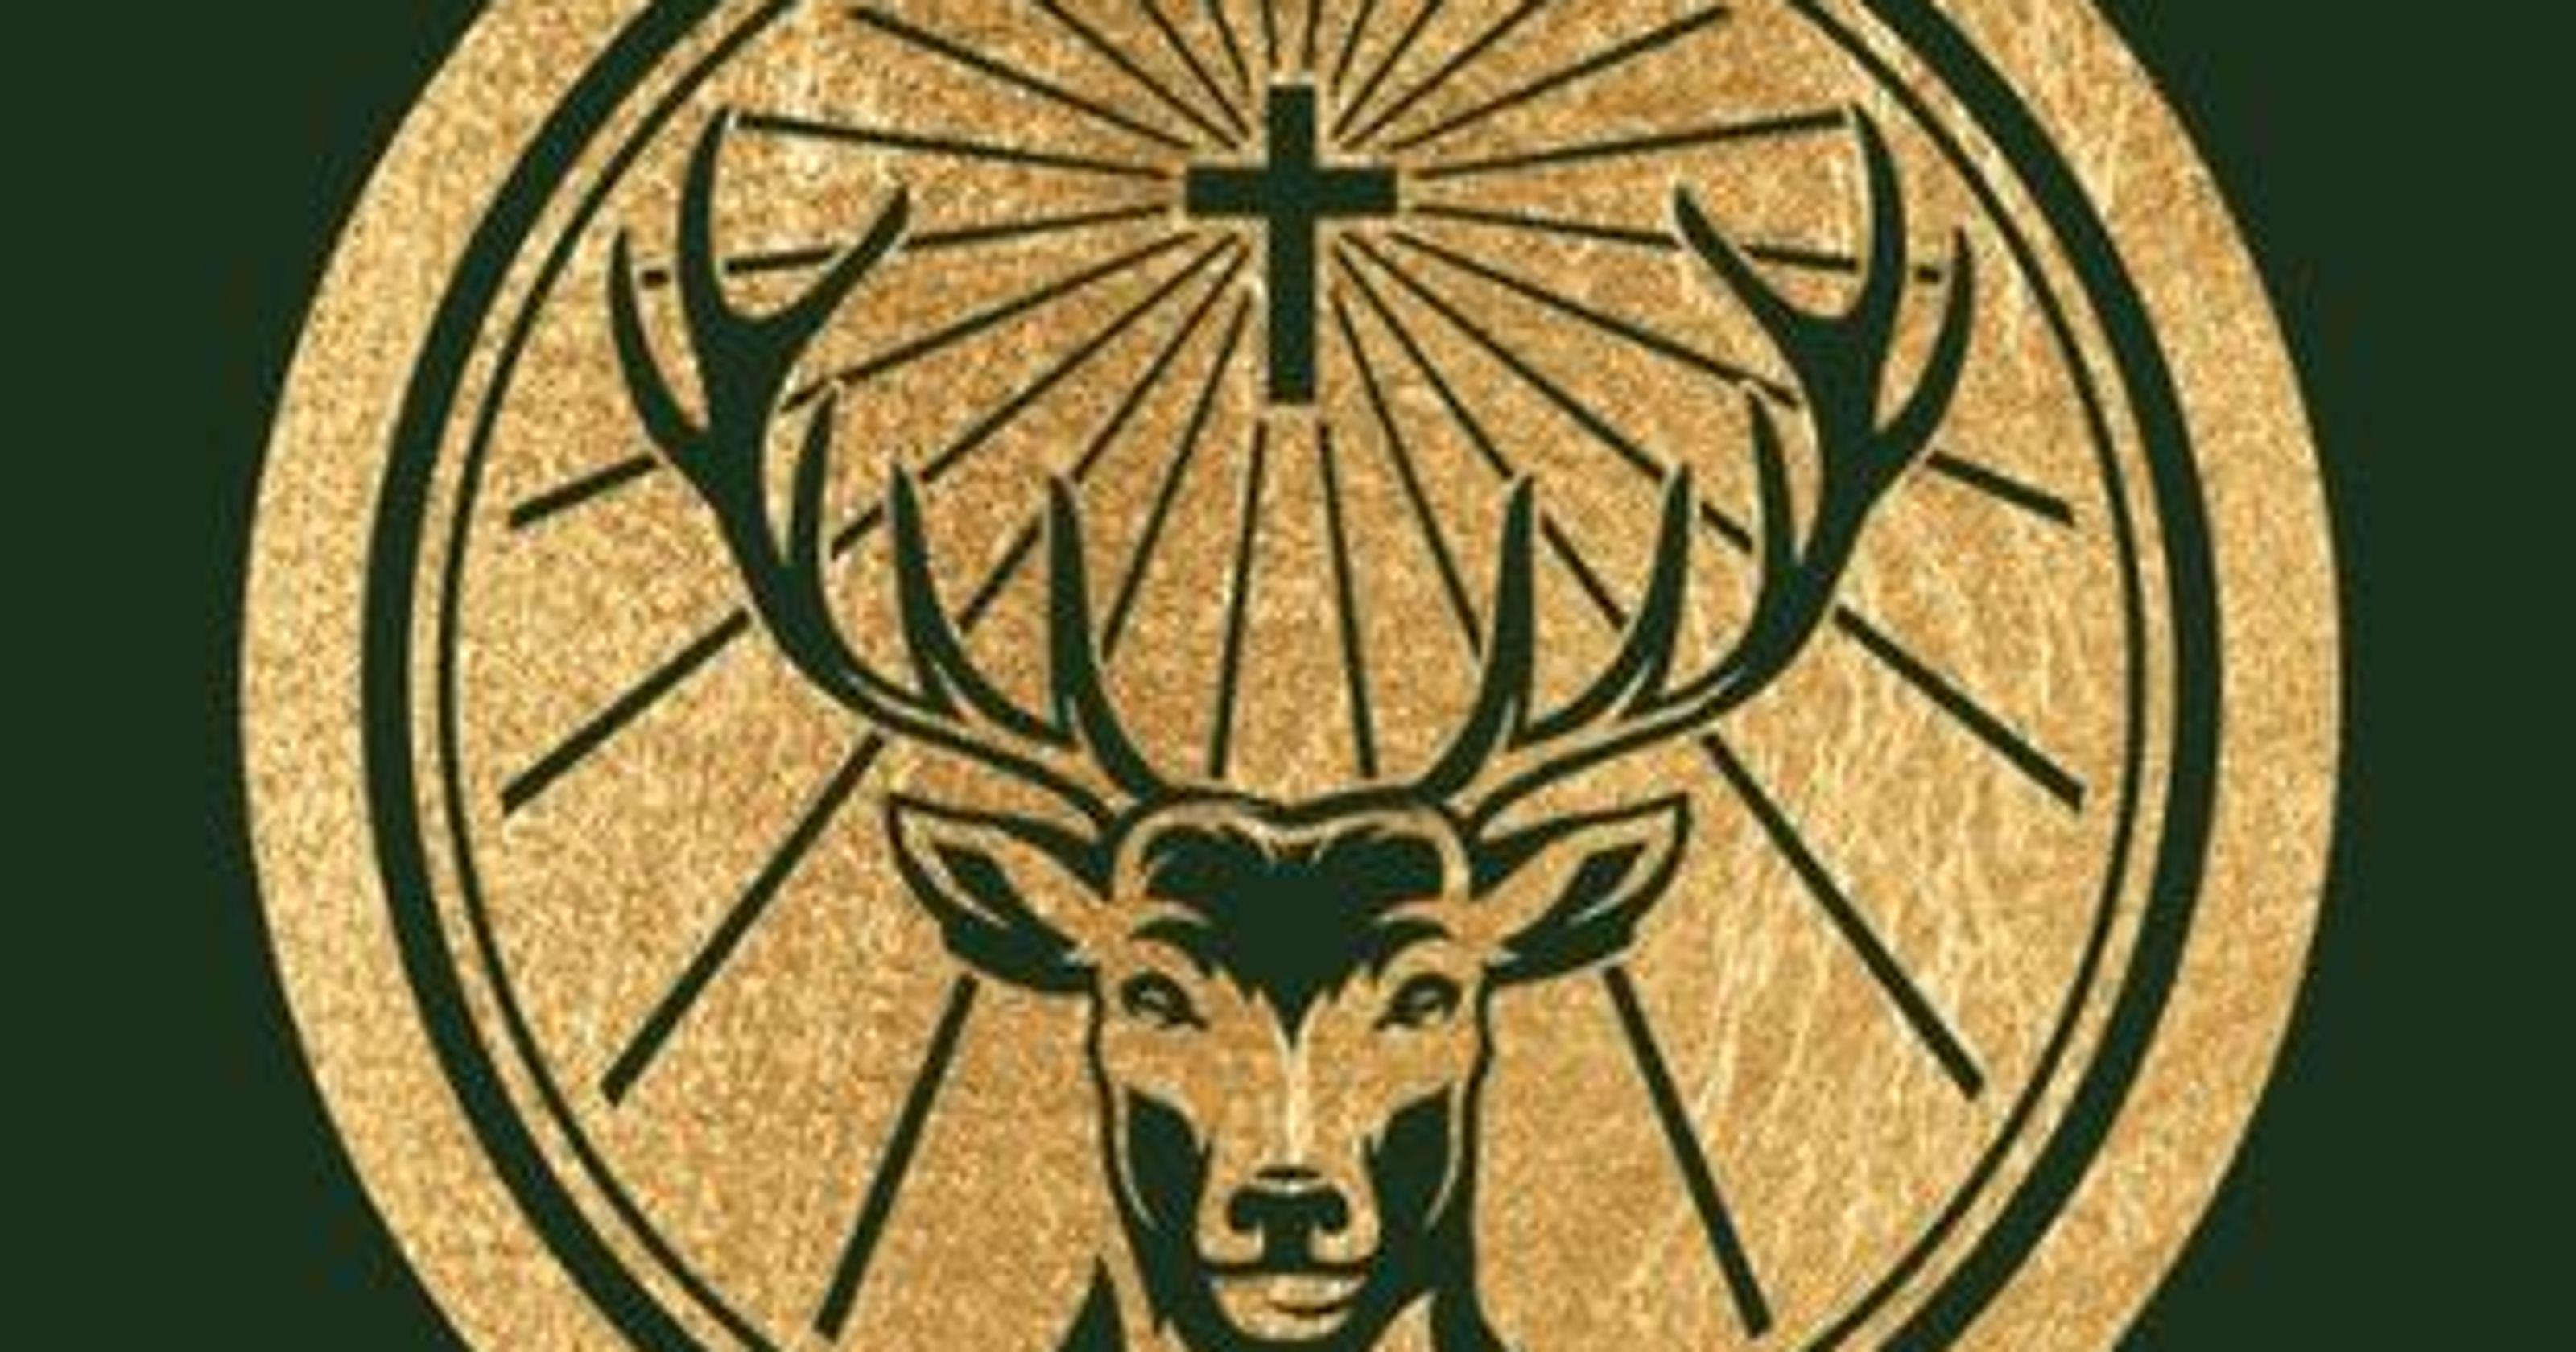 Jaegermeister Logo - Putting fear in the deer? Jägermeister contests Bucks logo